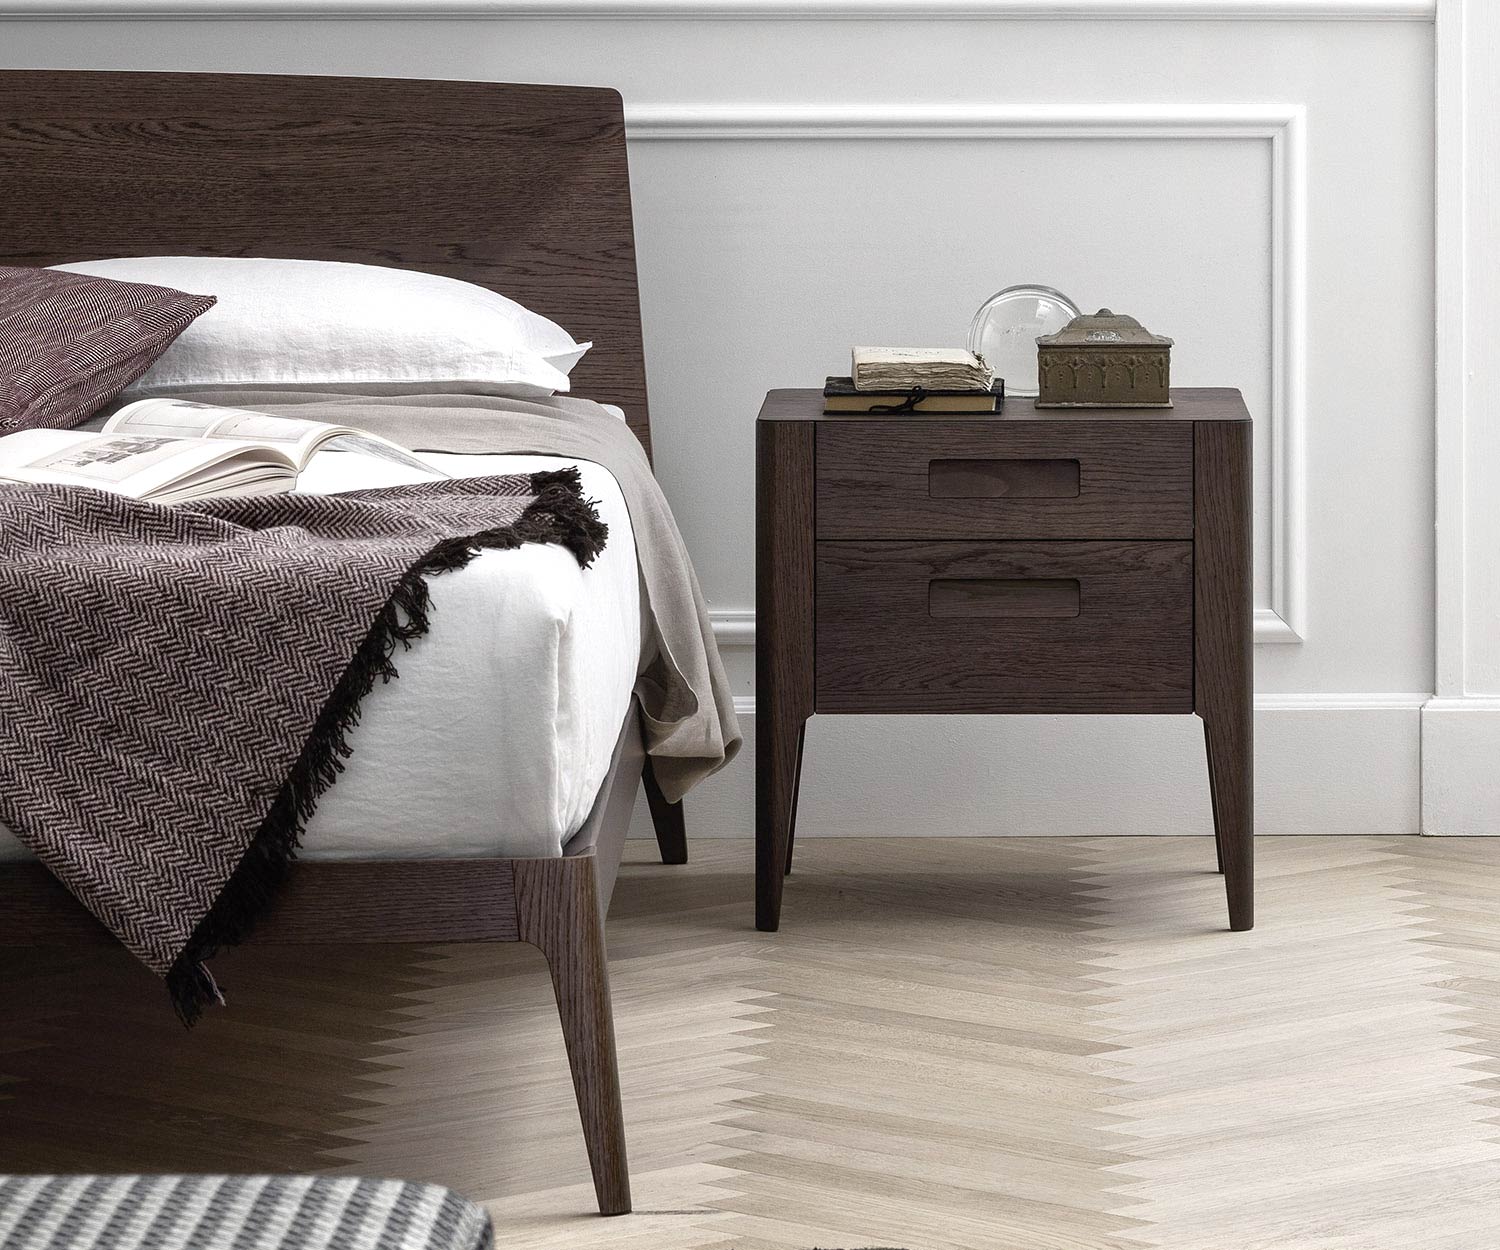 Modern donker design houten bed met nachtkastje in de slaapkamer